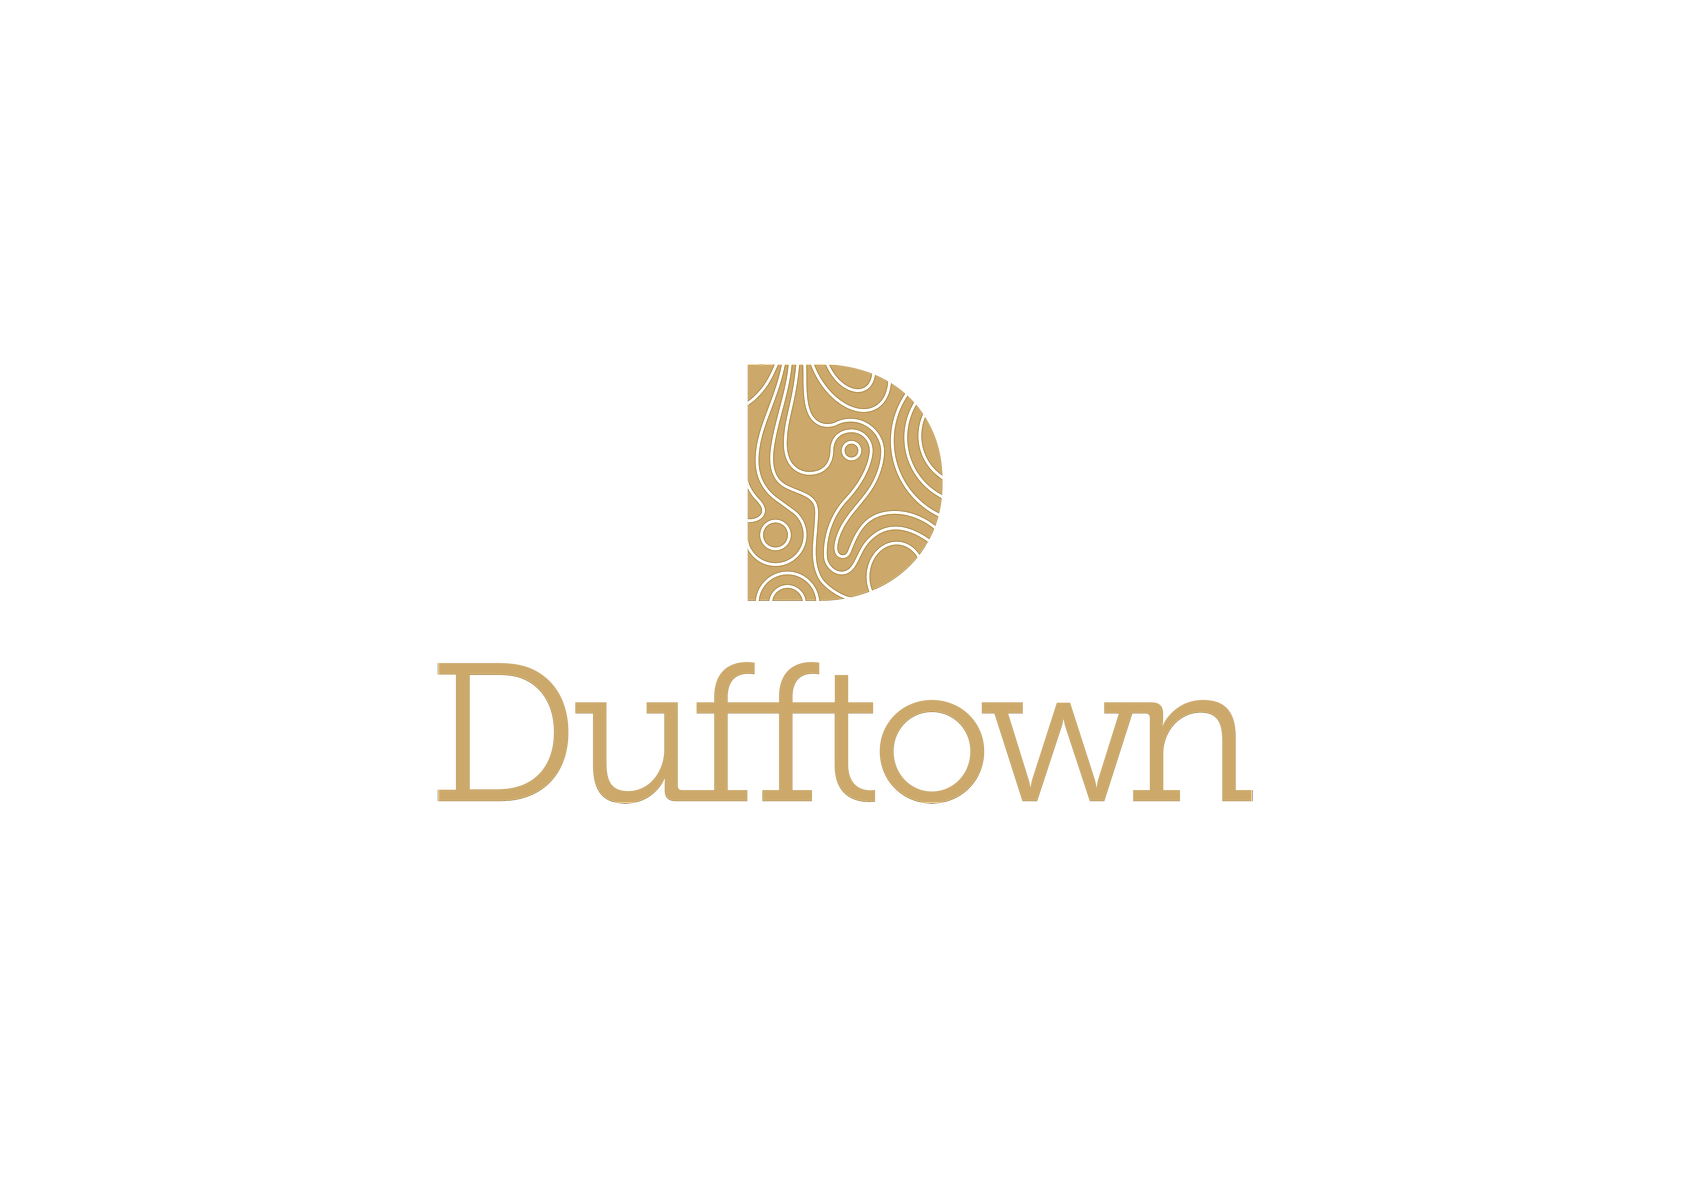 Destination Dufftown brand marque - lockup - copper